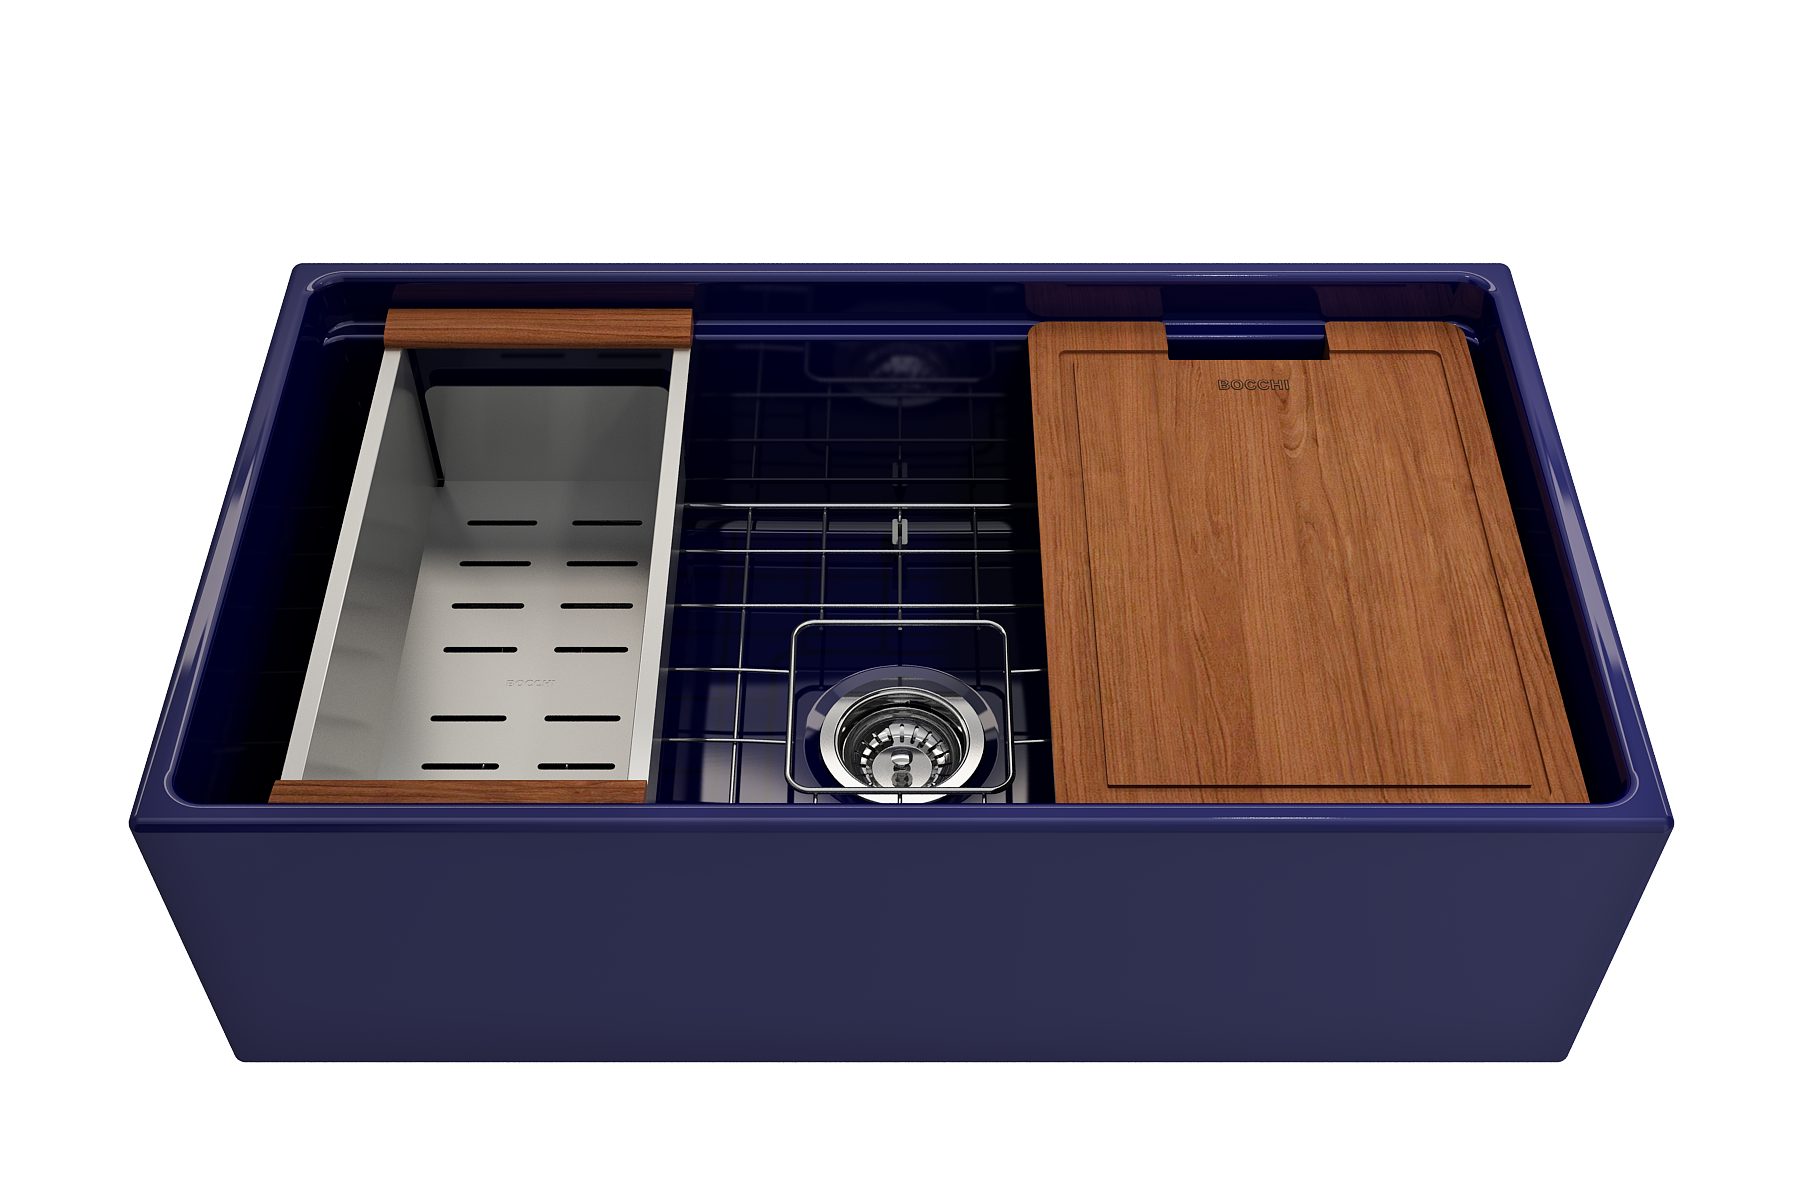 33" Fireclay Bocchi Contempo Apron Farmhouse Workstation Single Bowl Sink with Accessories